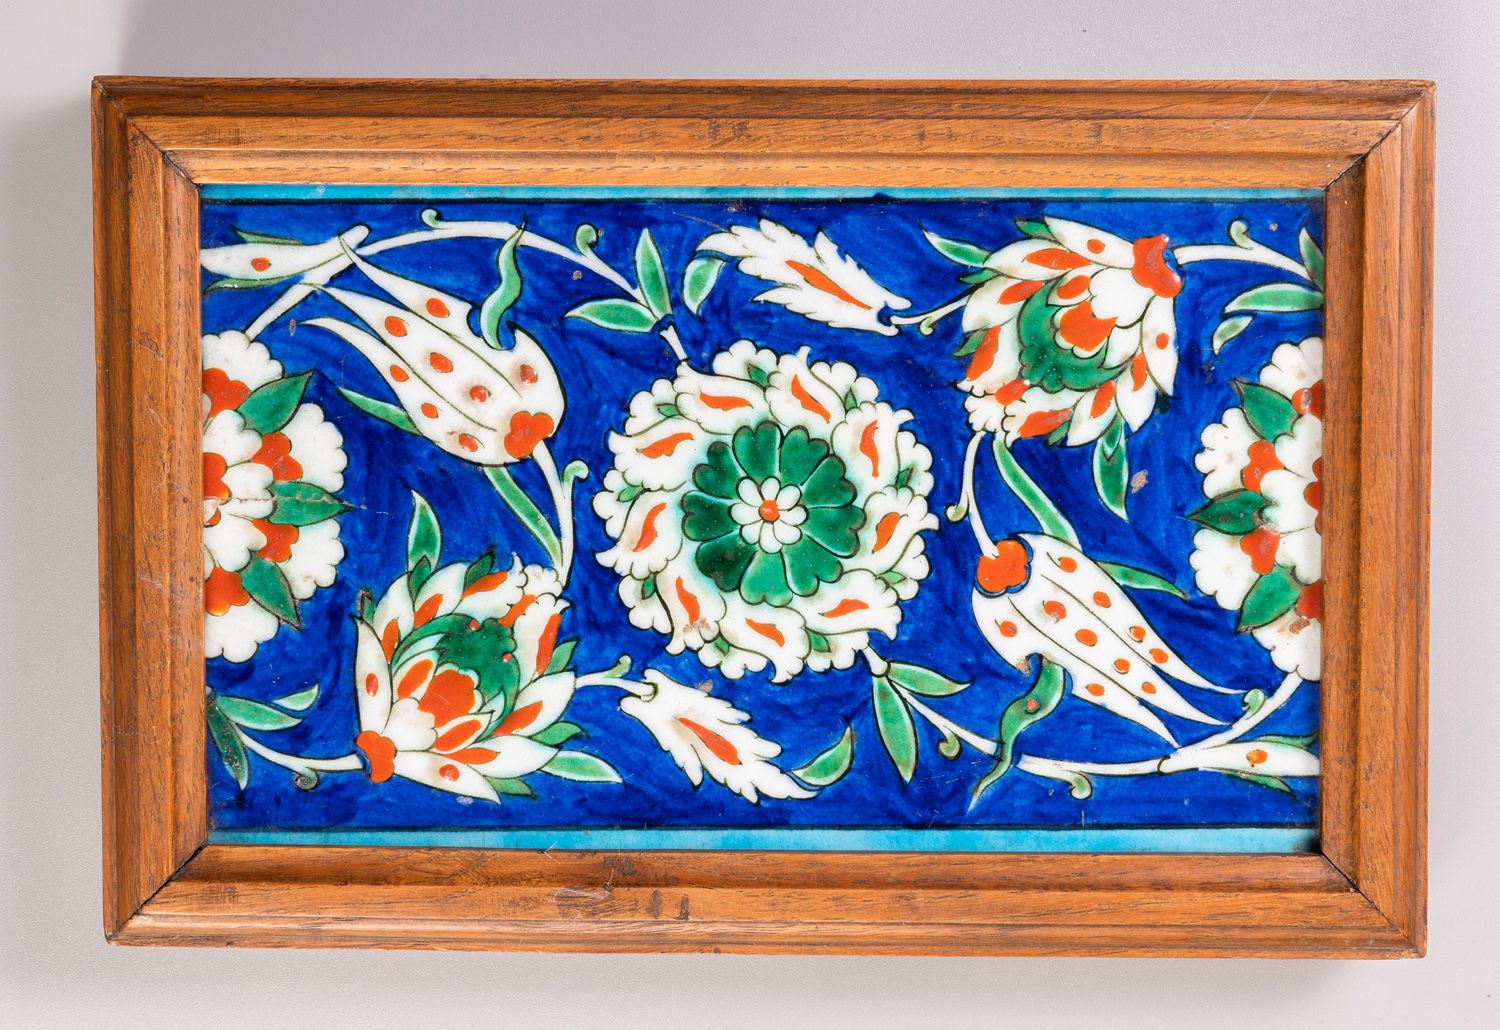 Null IZNIK

长方形硅质瓷片，含铅釉

带有郁金香、石榴和其他多色的装饰。

在一个蓝色的背景上。

16世纪下半叶。

23 x 14 cm。

(&hellip;